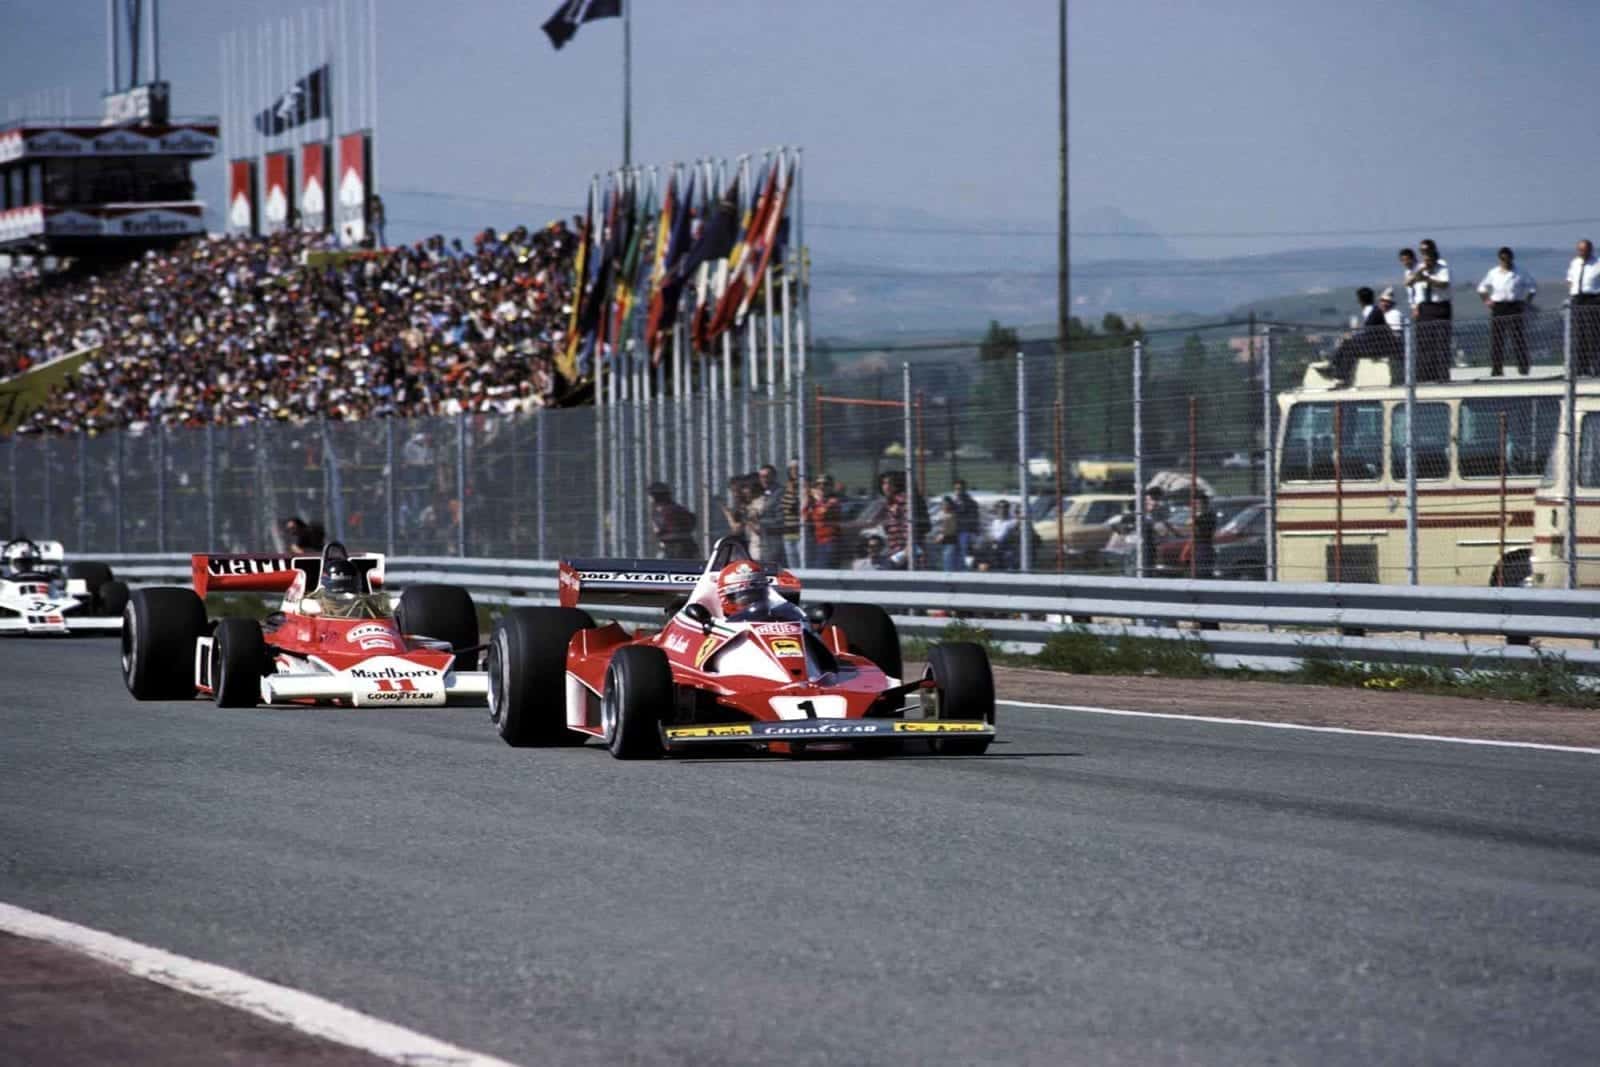 James Hunt (McLaren) chases Niki Lauda (Ferrari) at the 1976 Spanish Grand Prix